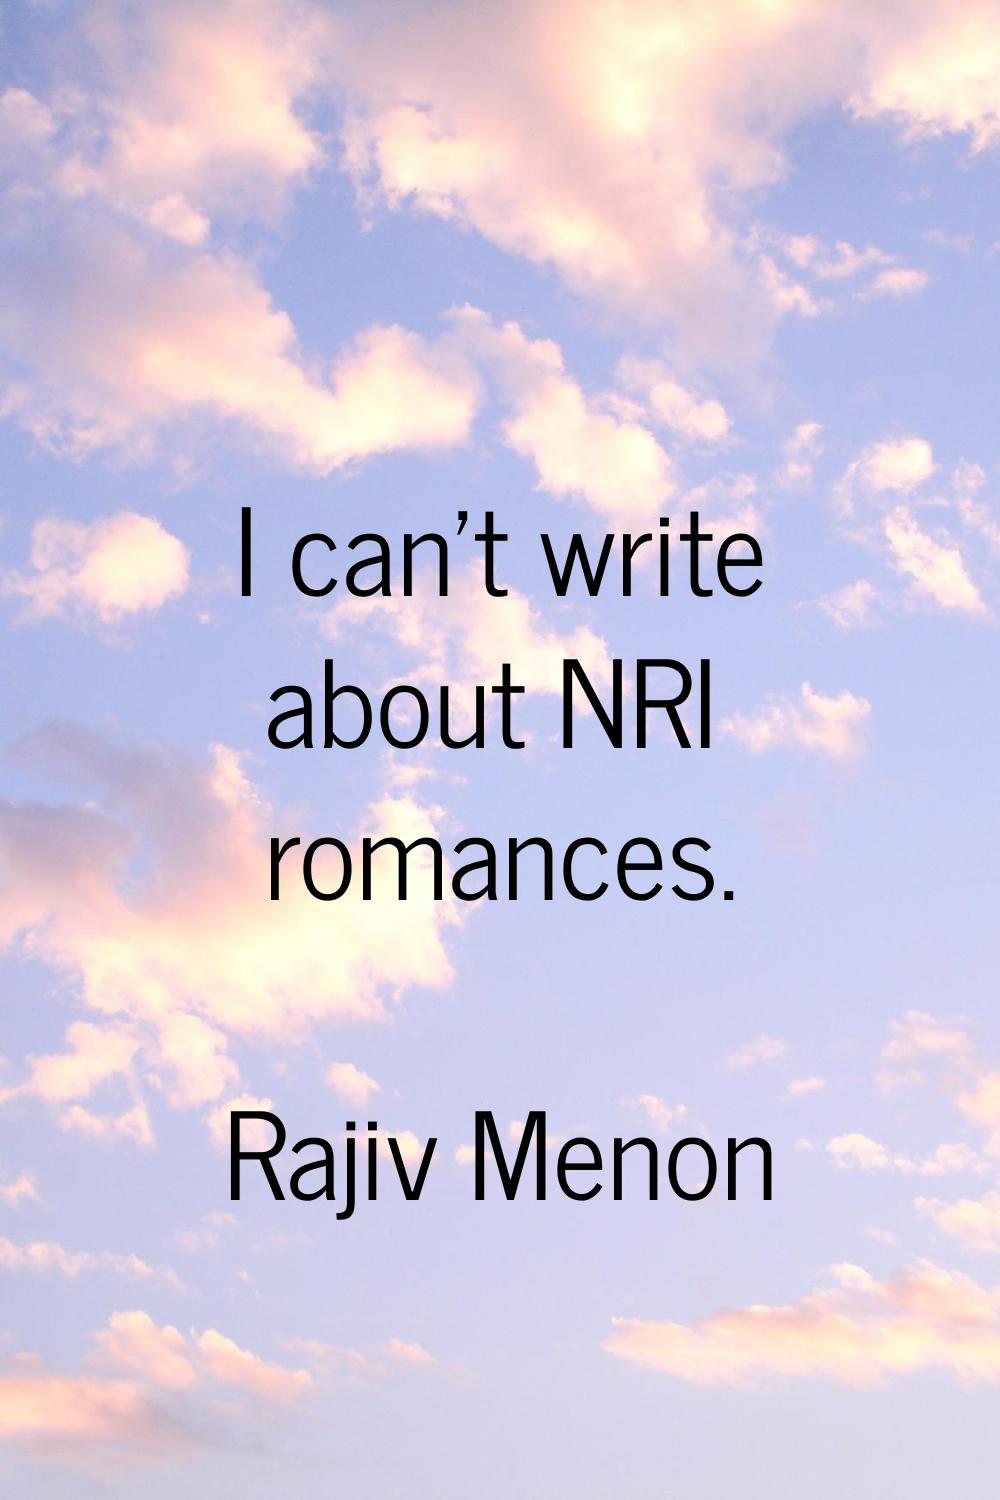 I can't write about NRI romances.